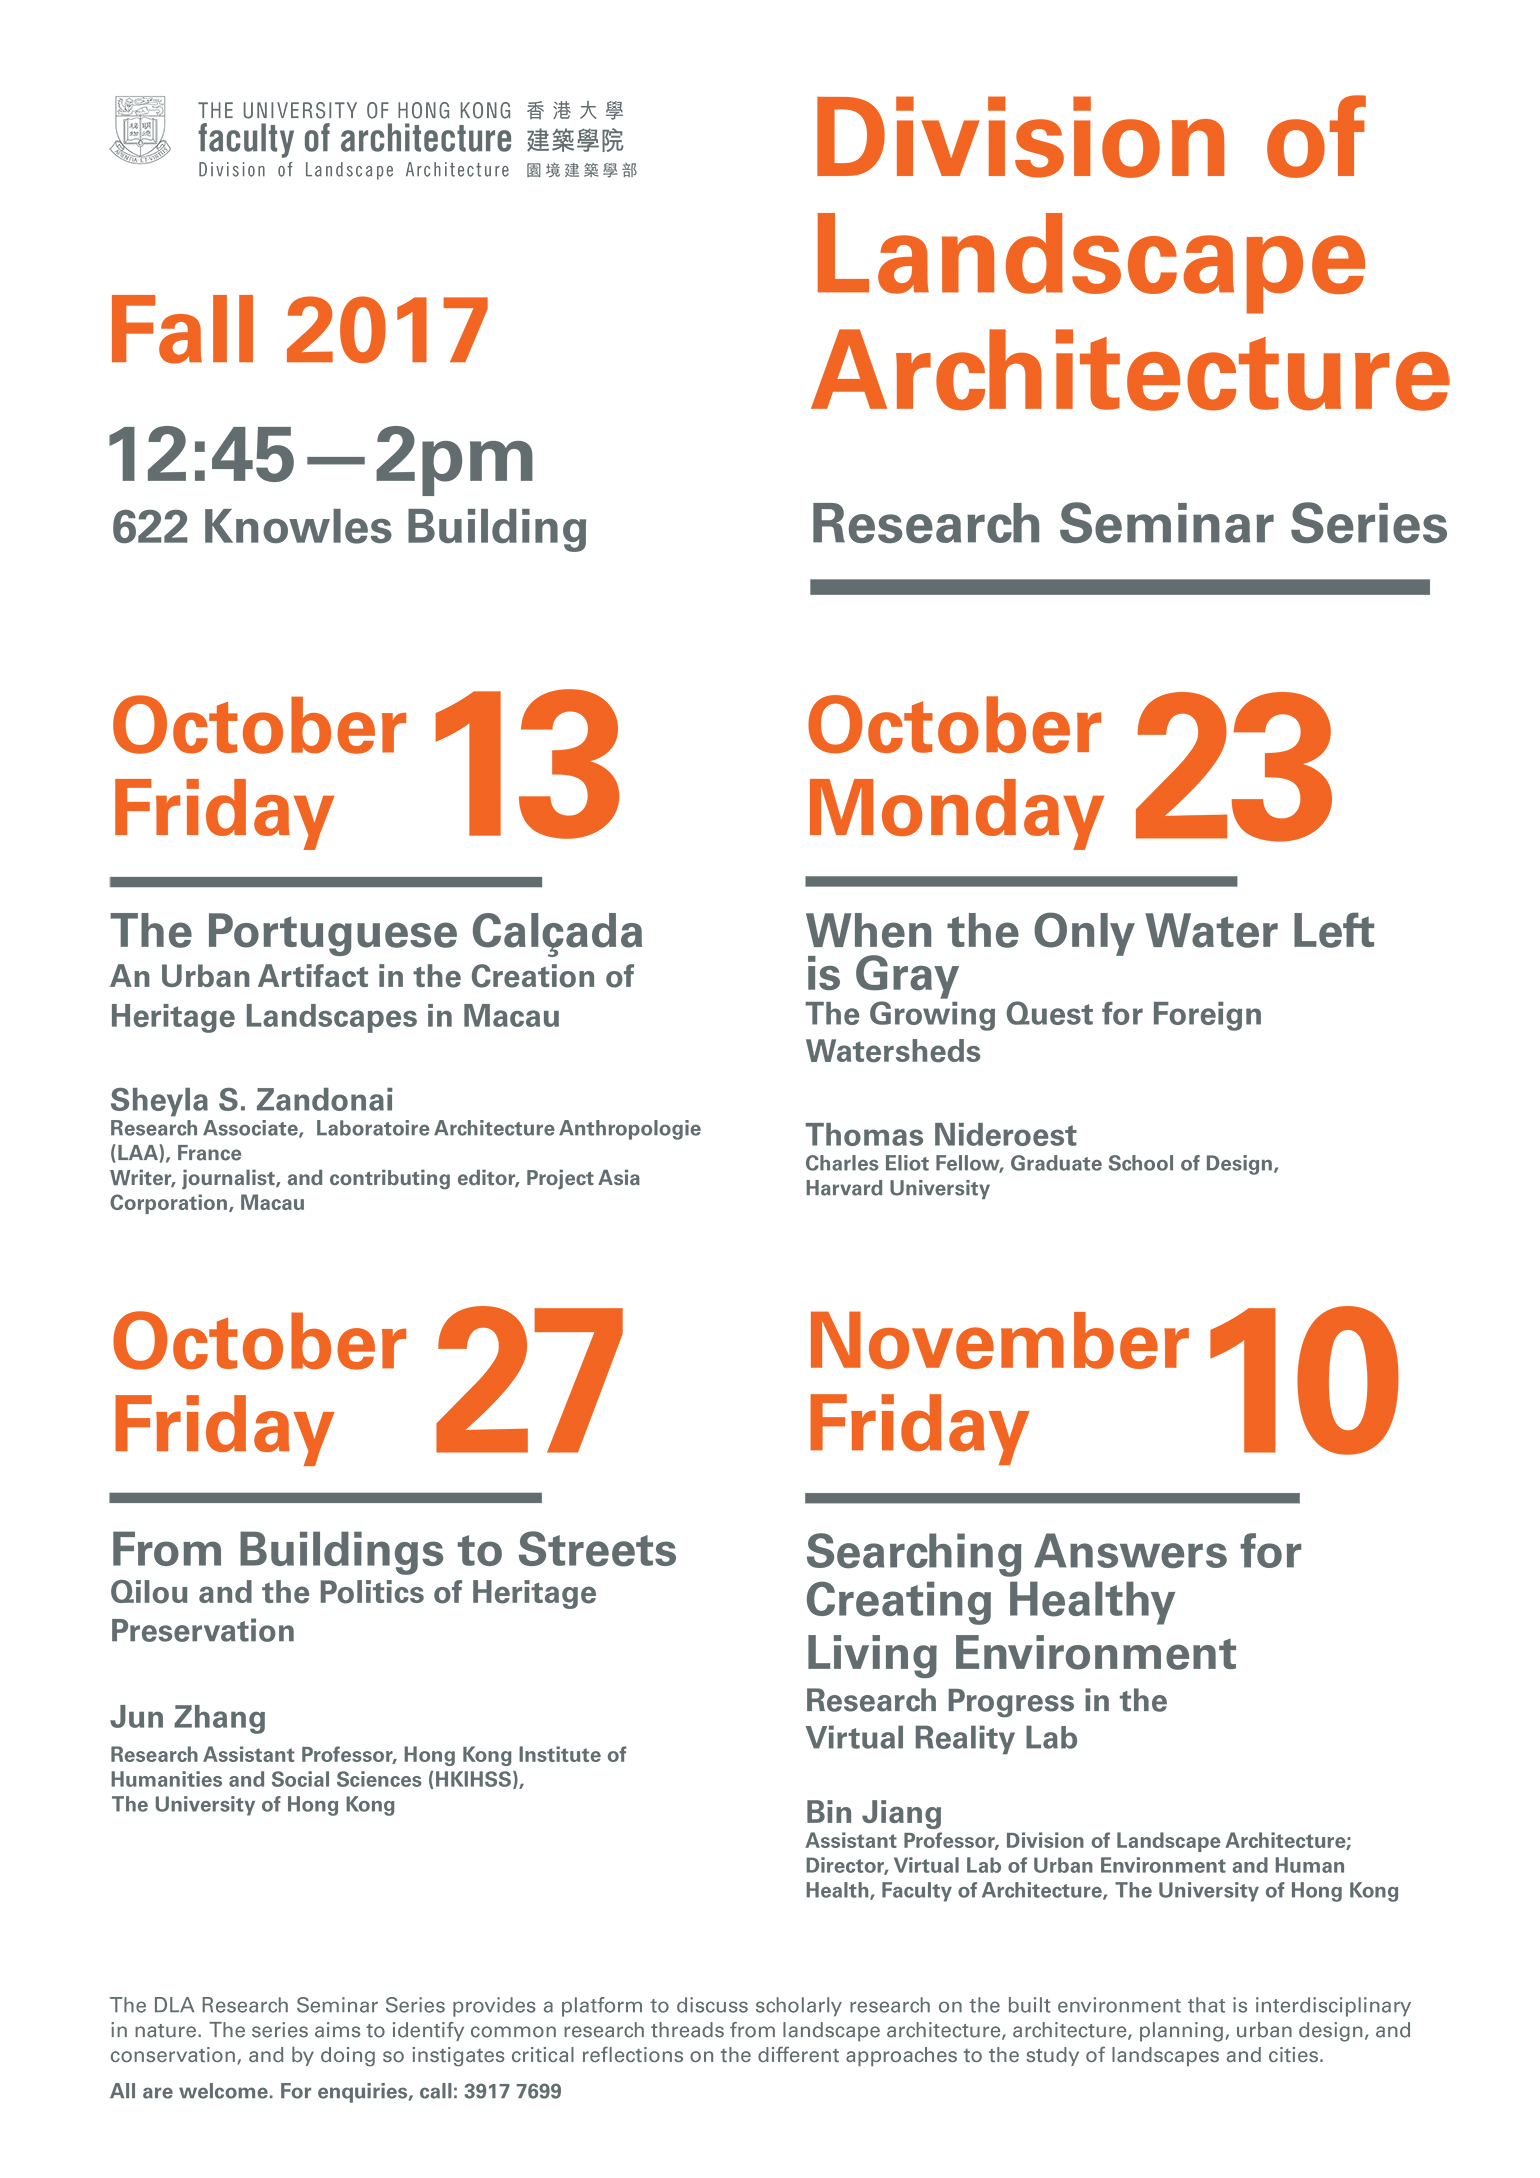 Division of Landscape Architecture Fall Seminars Series